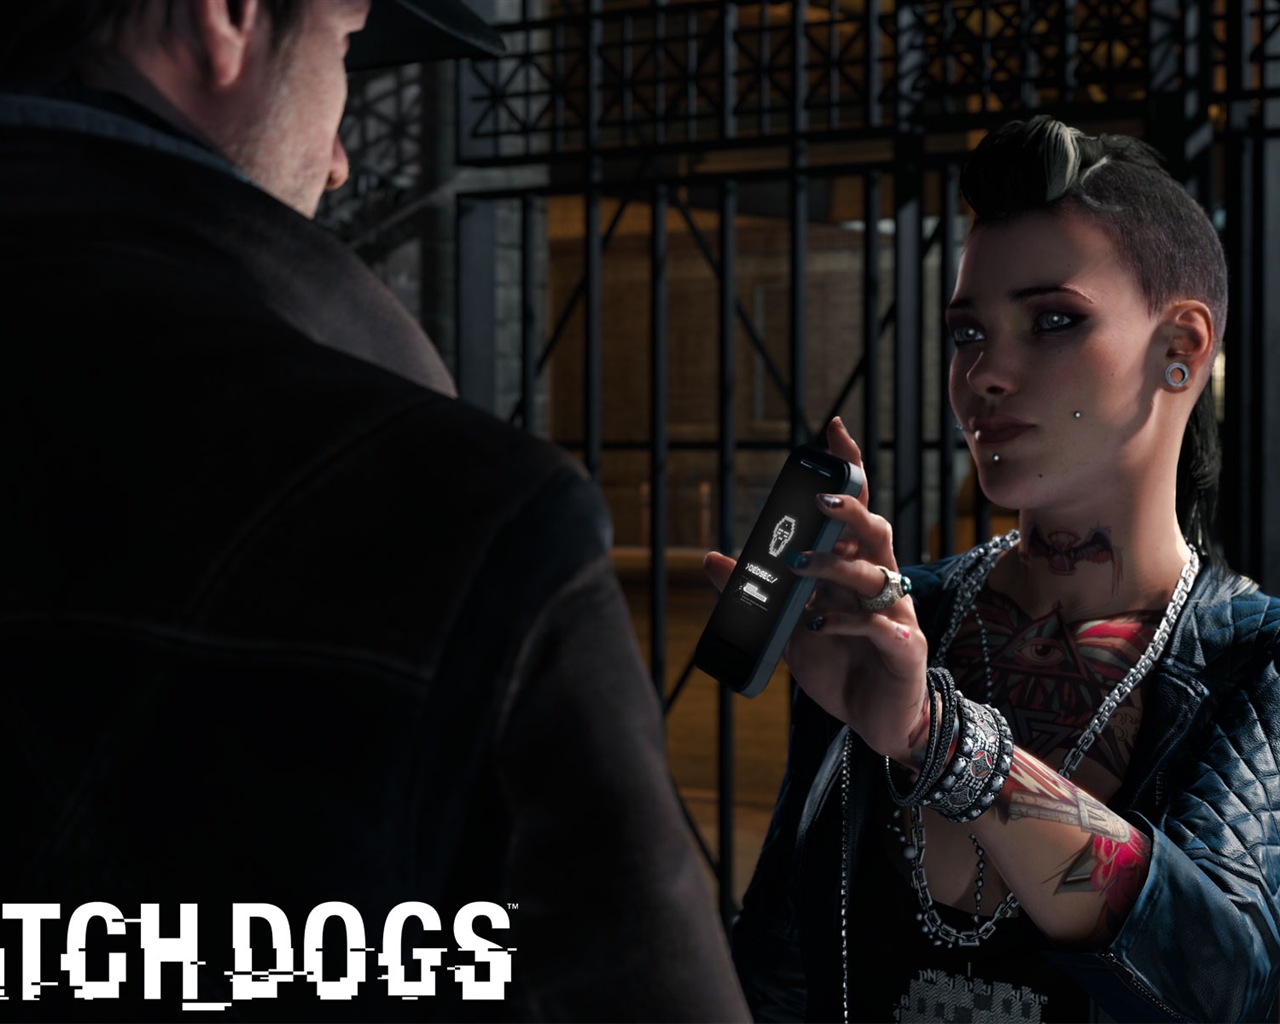 Watch Dogs 2013 HD herní plochu #3 - 1280x1024